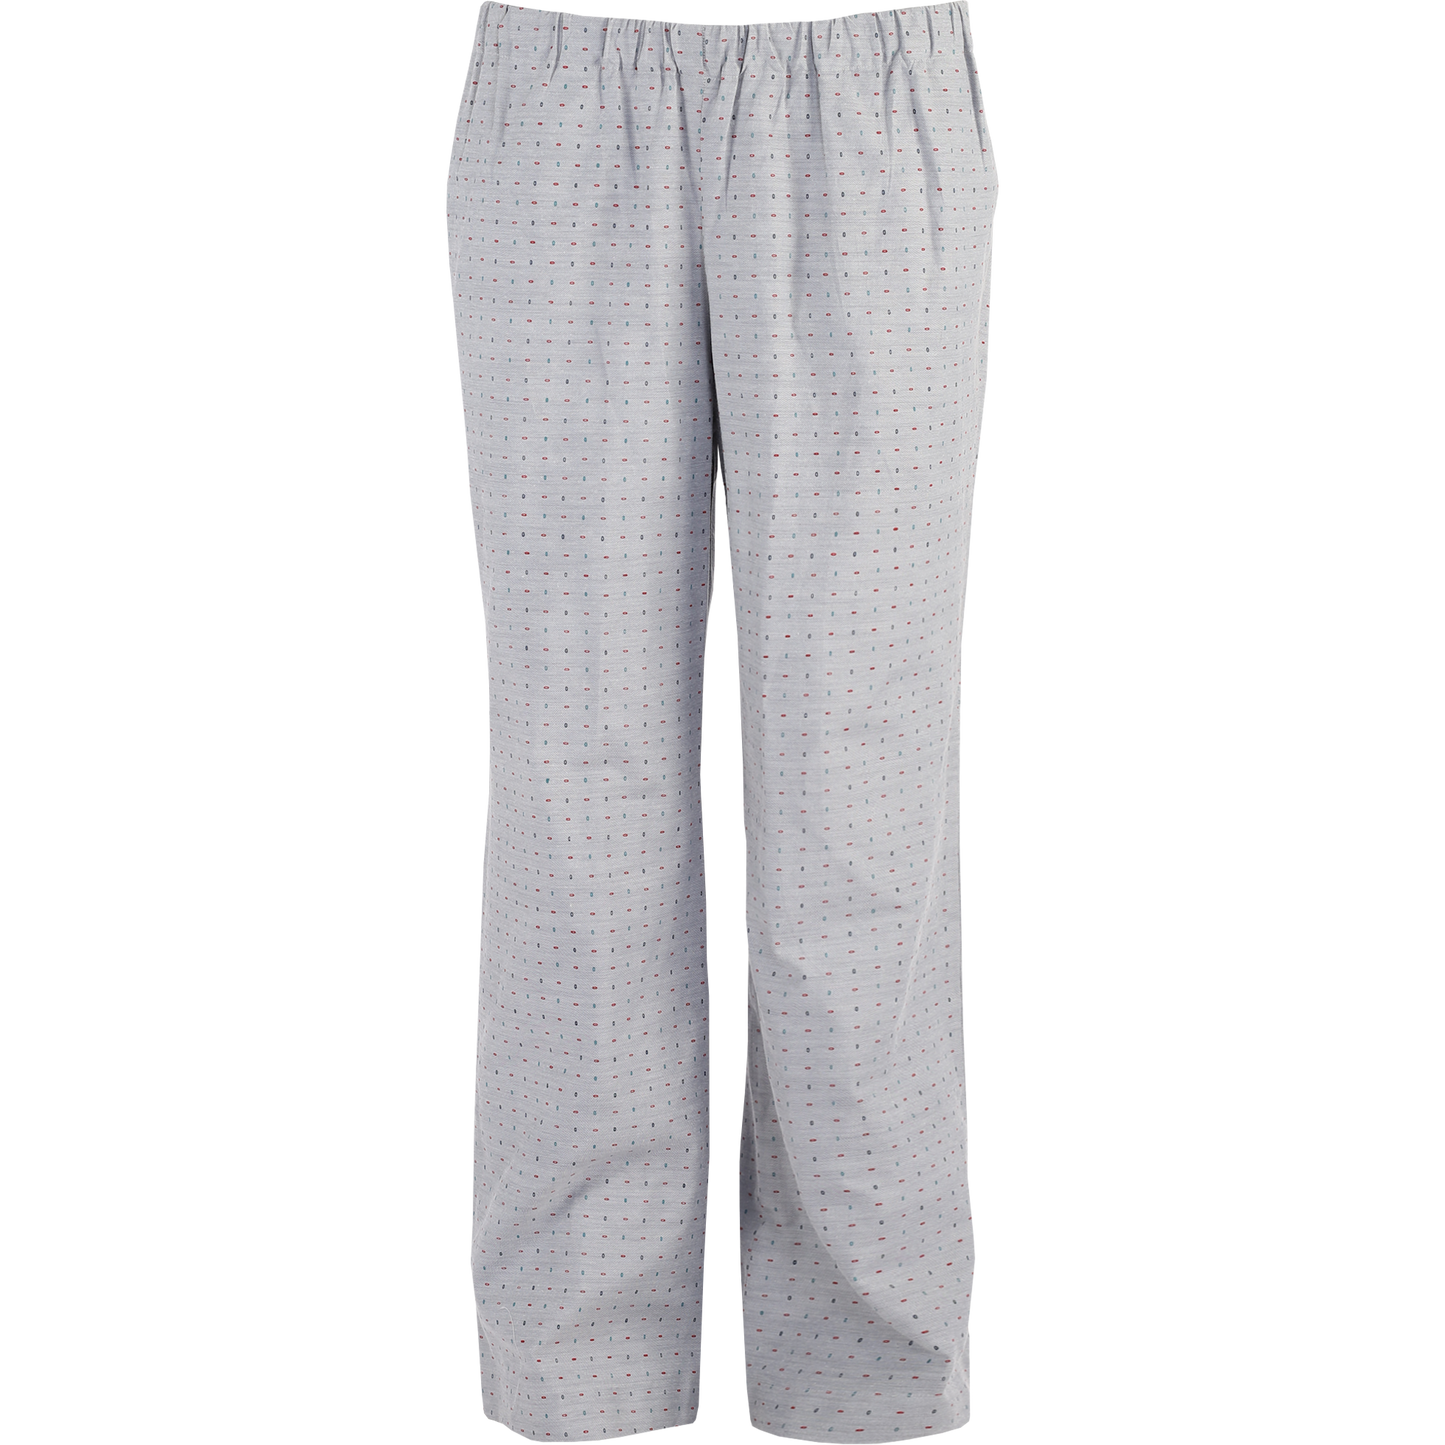 Grey Inpatient Pyjama Pants — Hospital & Nursing Home uniforms by CYC